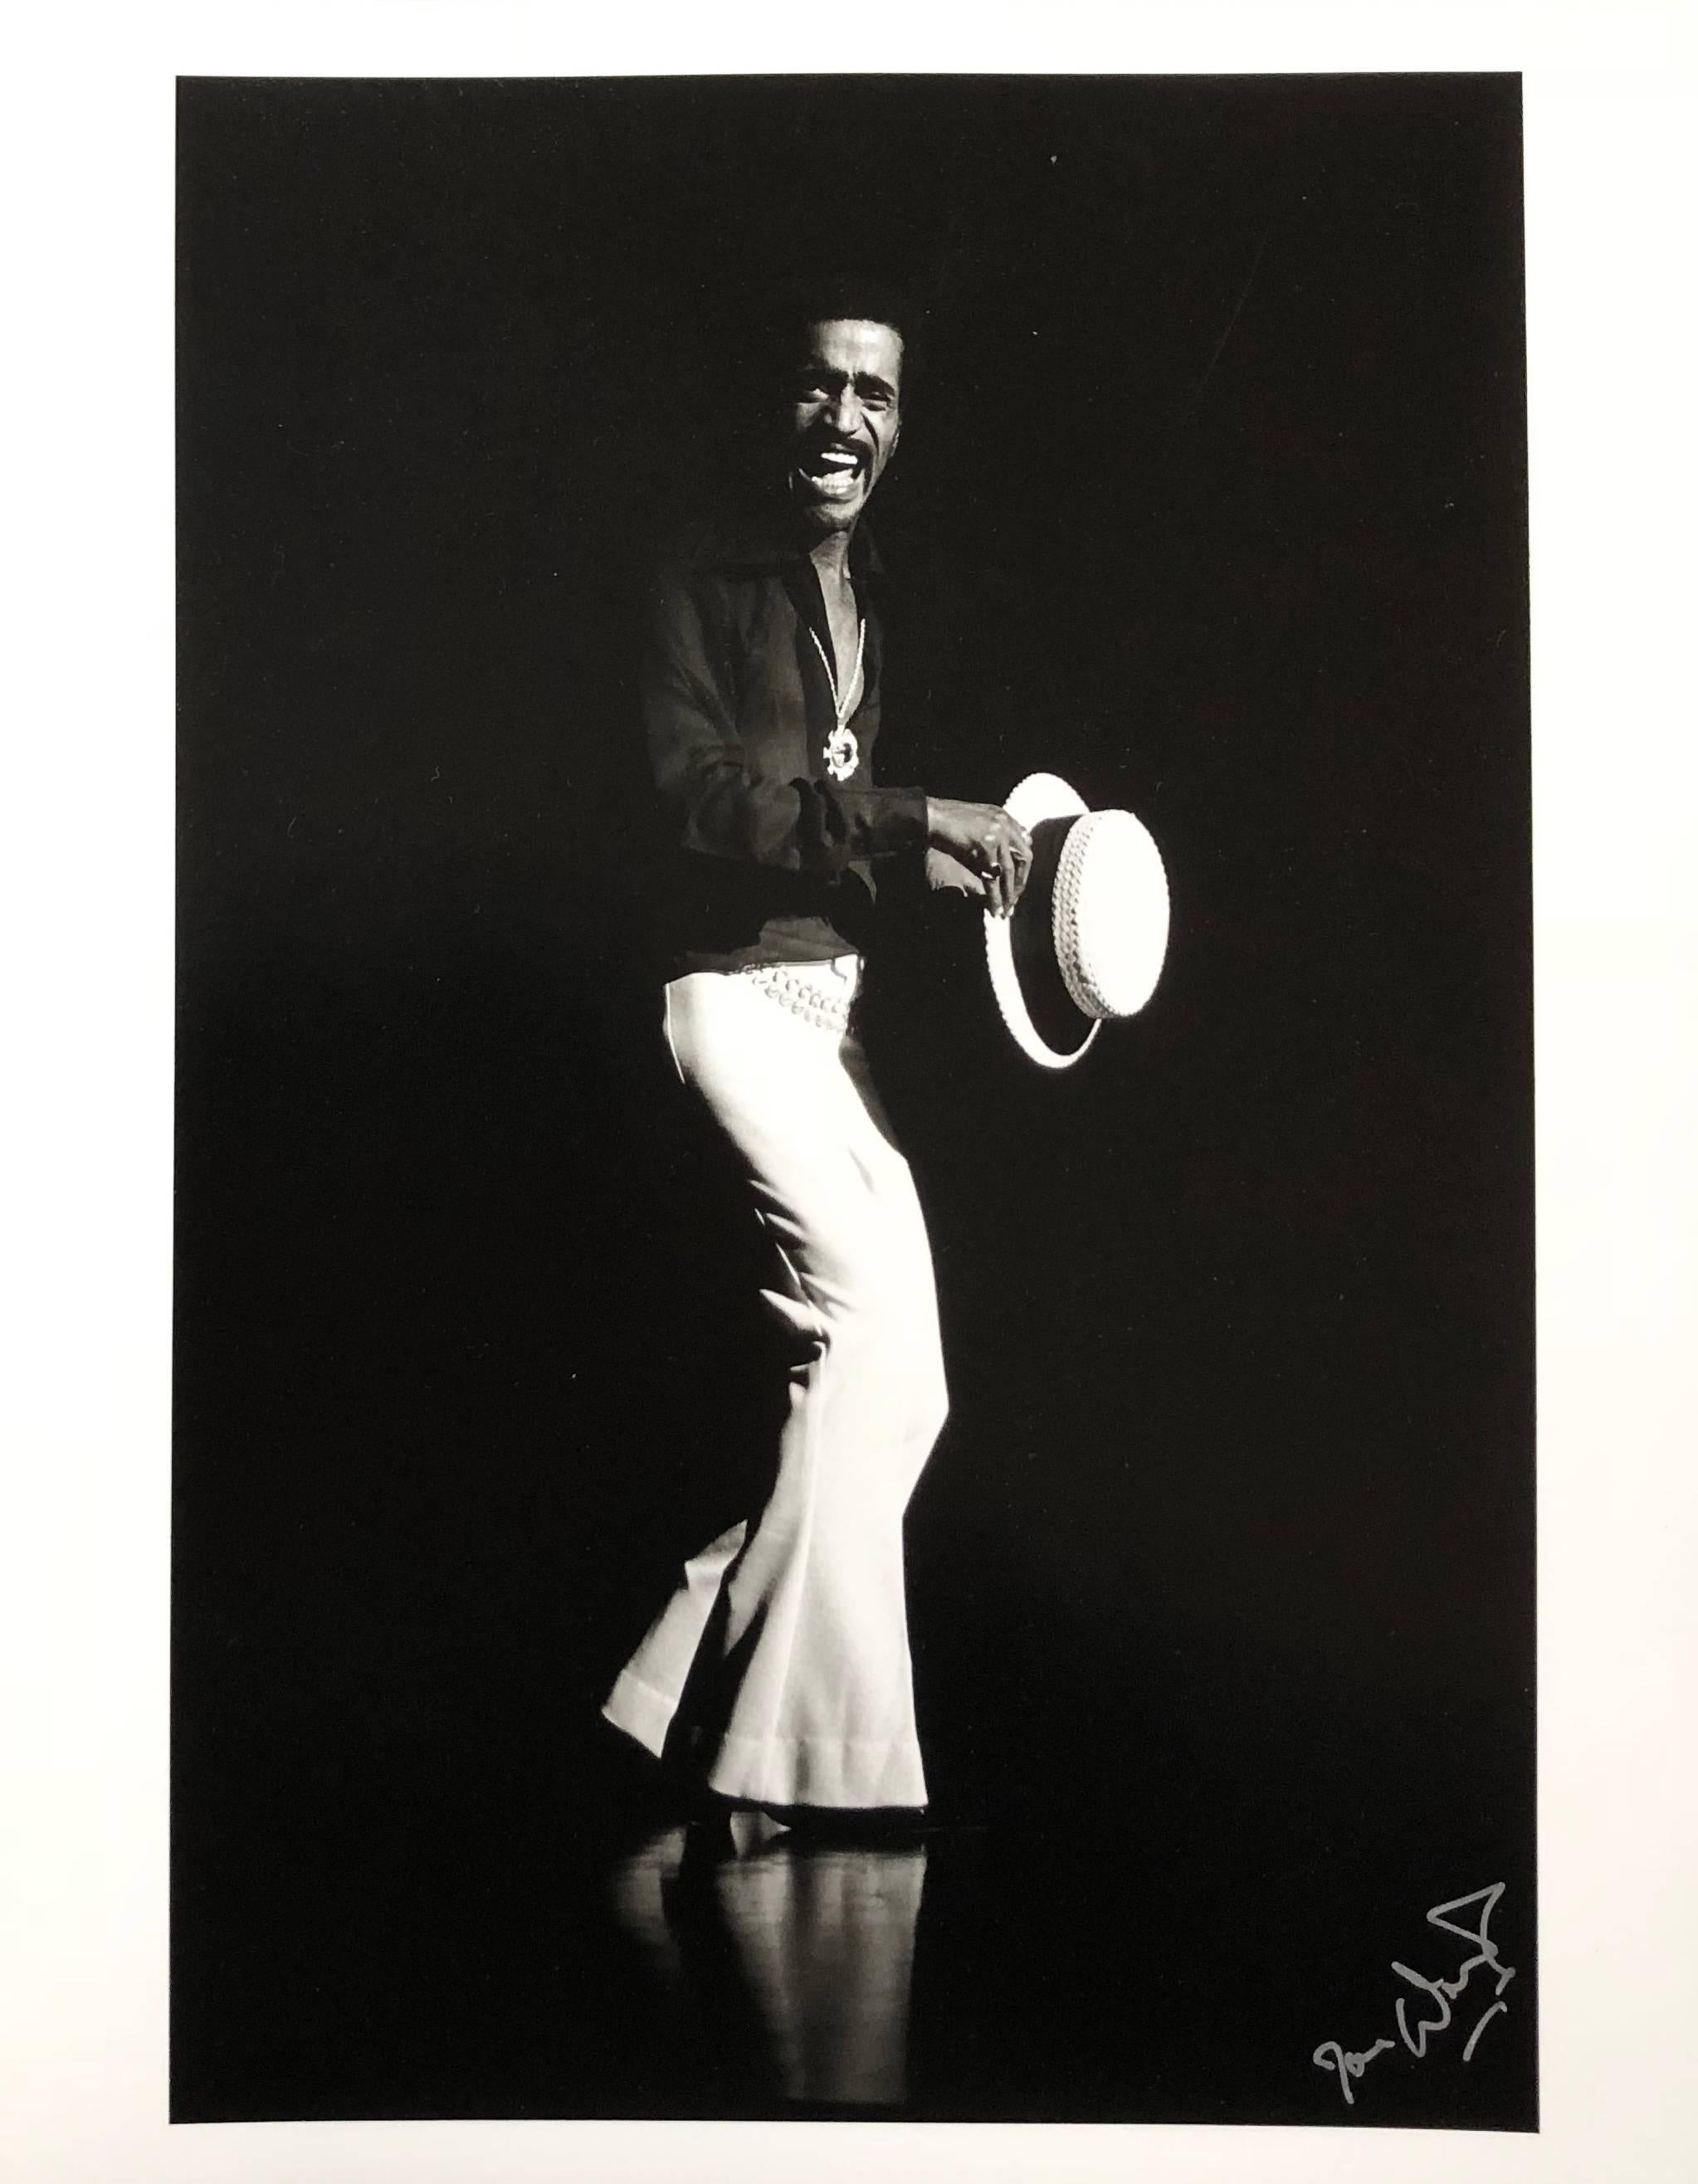 Joe Waldorf Portrait Photograph - Sammy Davis Jr., original photograph from the original negative, hand signed